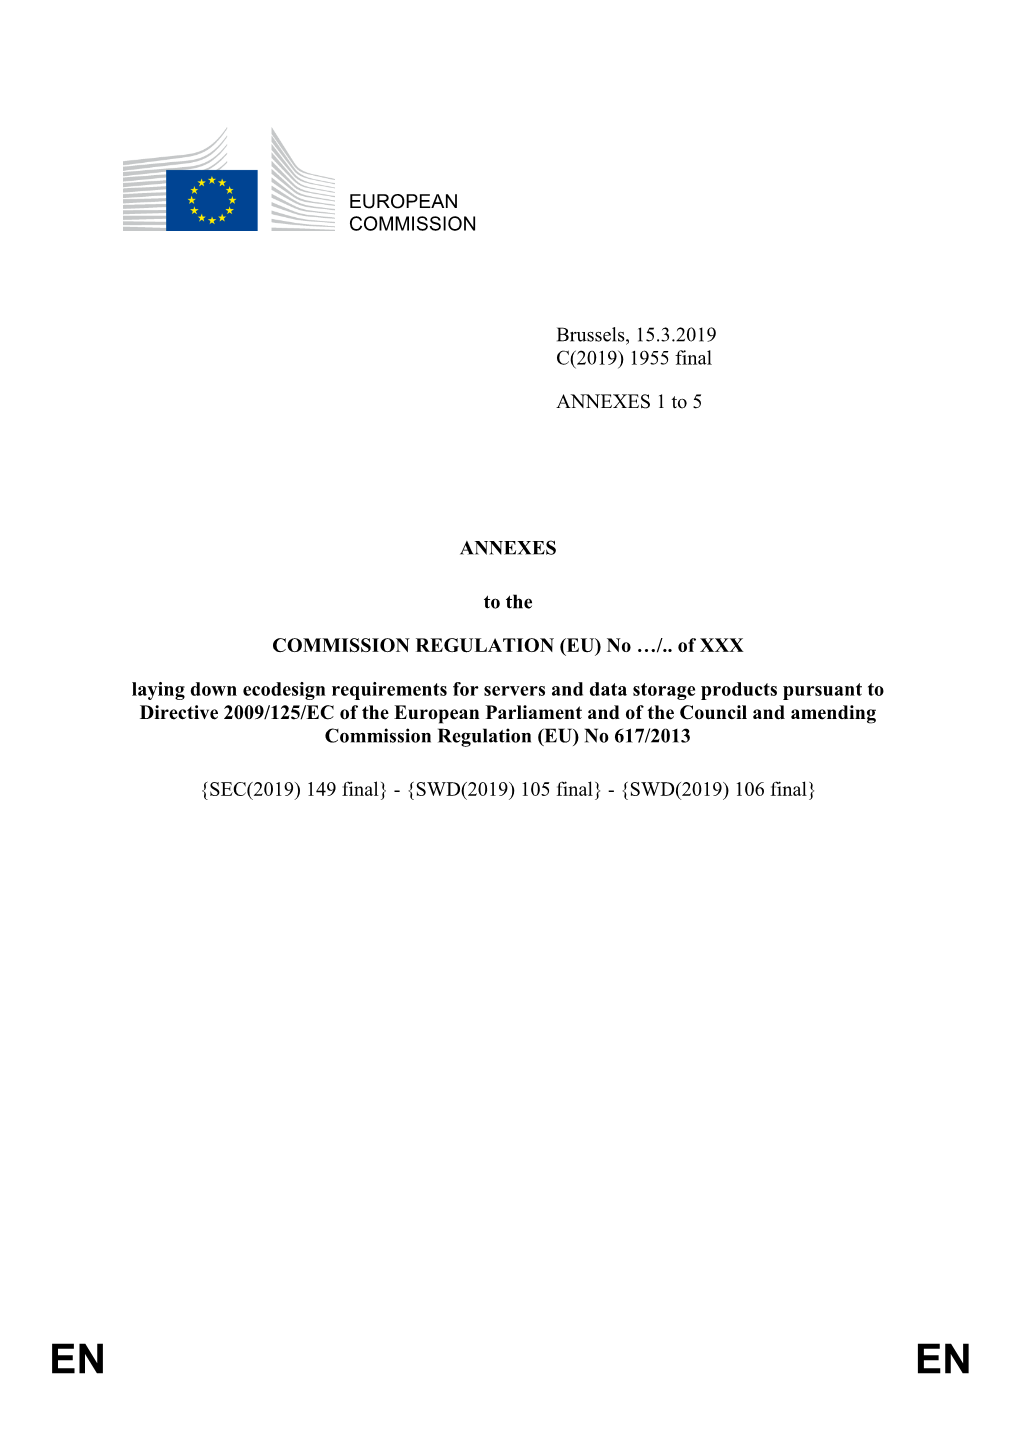 EUROPEAN COMMISSION Brussels, 15.3.2019 C(2019) 1955 Final ANNEXES 1 to 5 ANNEXES to the COMMISSION REGULATION (EU) No …/.. O